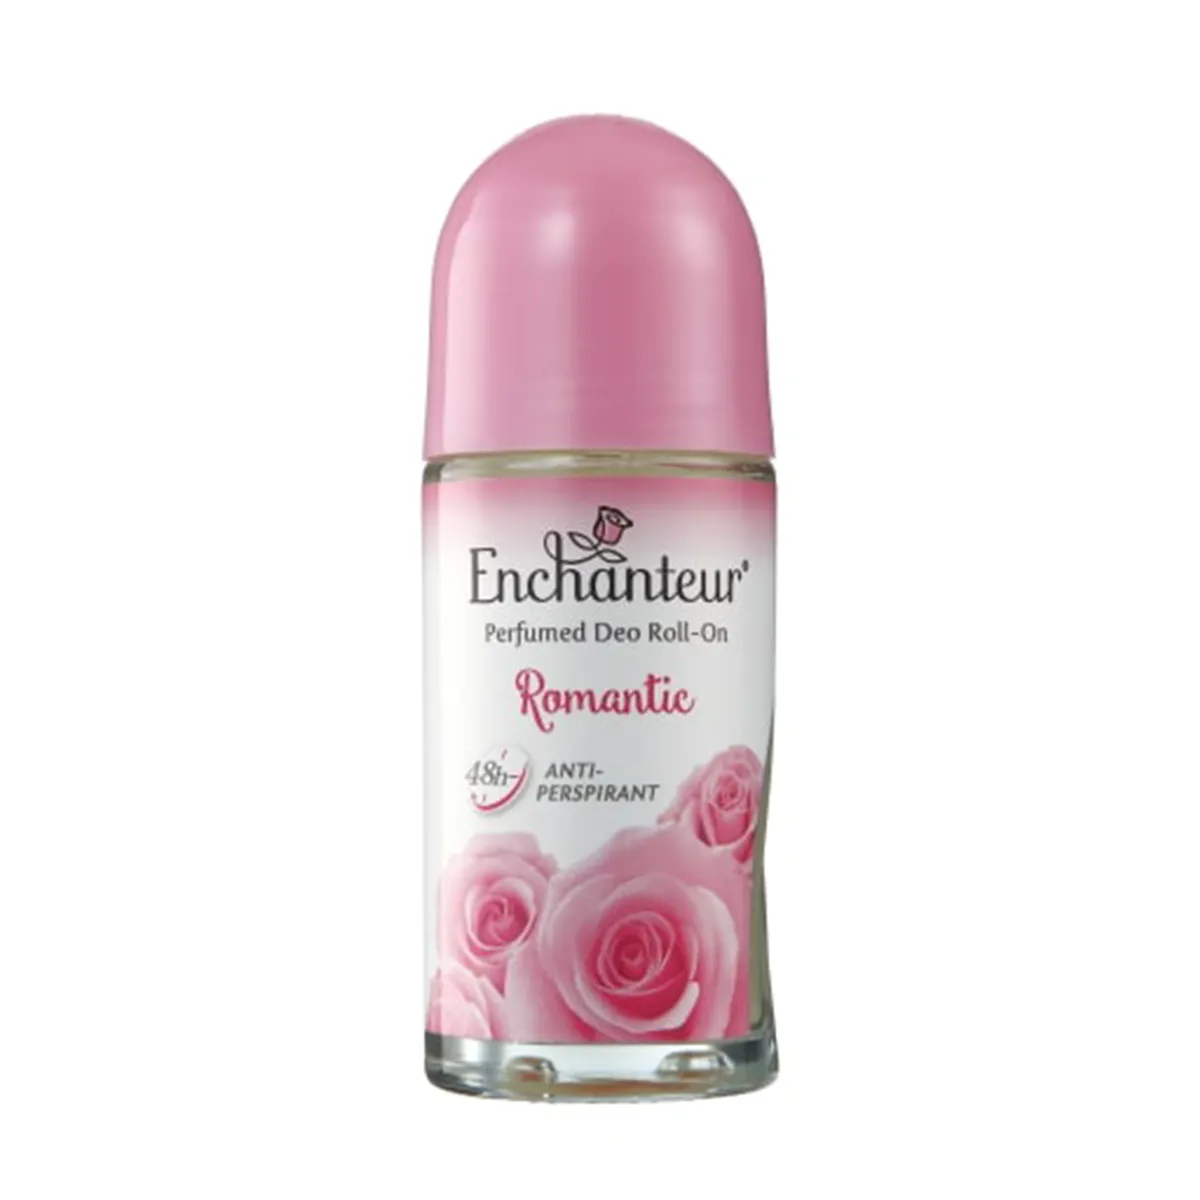 Enchanteur Romantic Perfumed Deo Roll On - 50ml